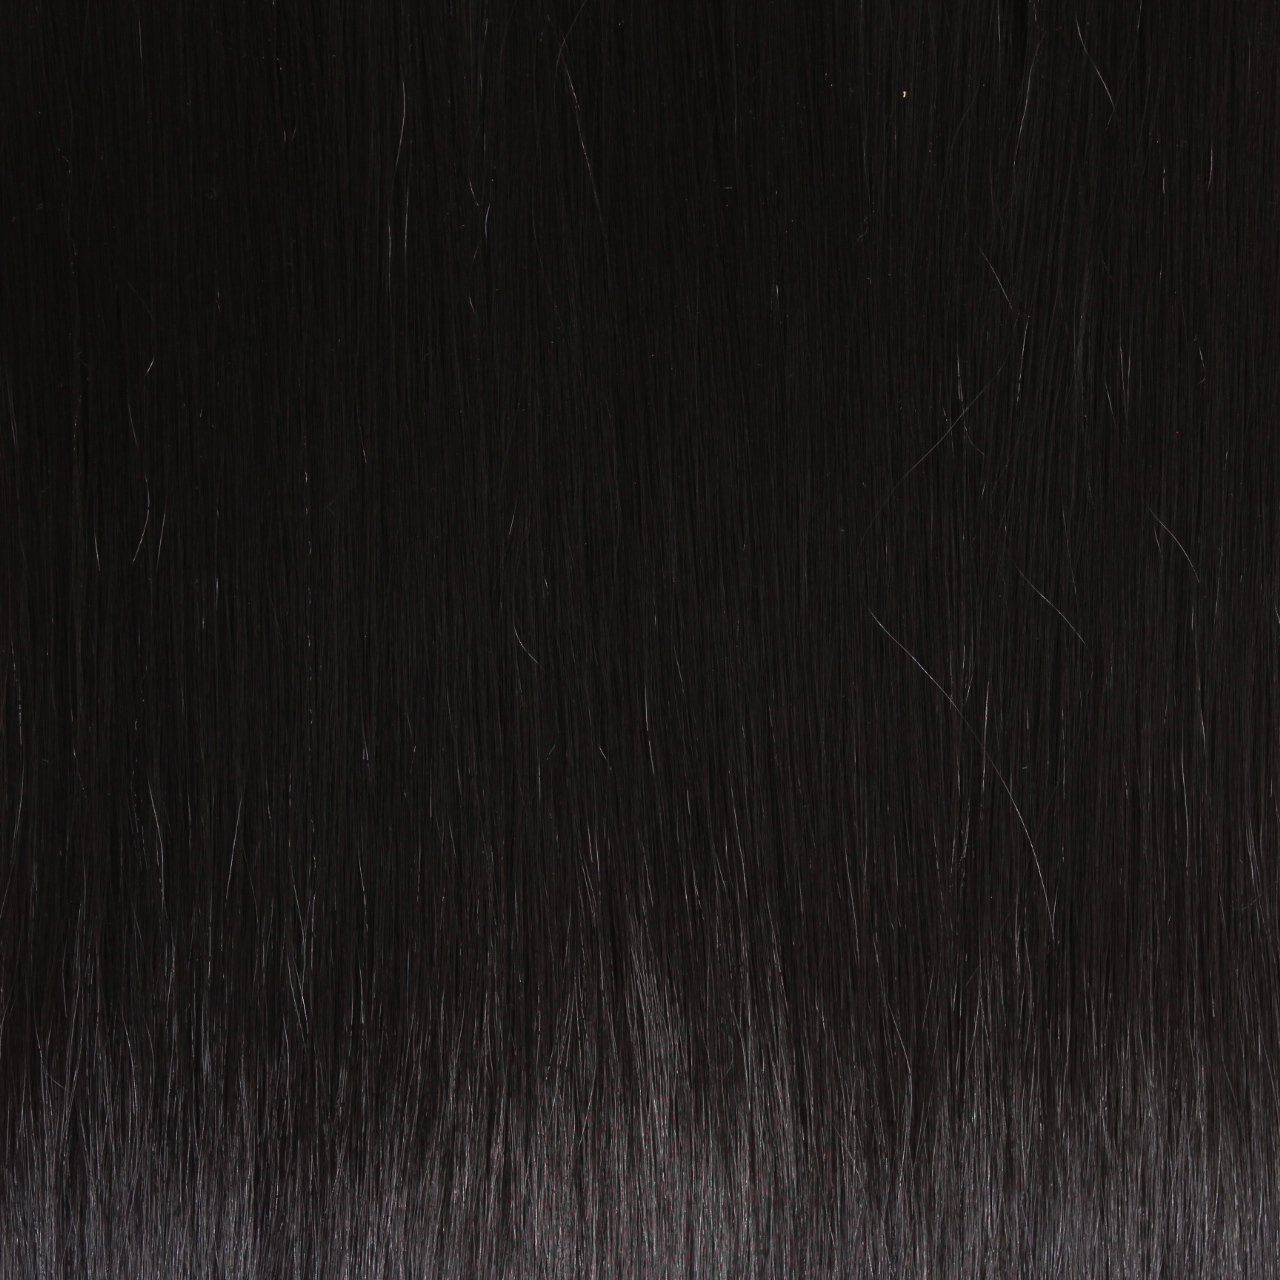 Kunsthaar-Extension Haarteil Ponytail S-1b gewellt hair2heart - /